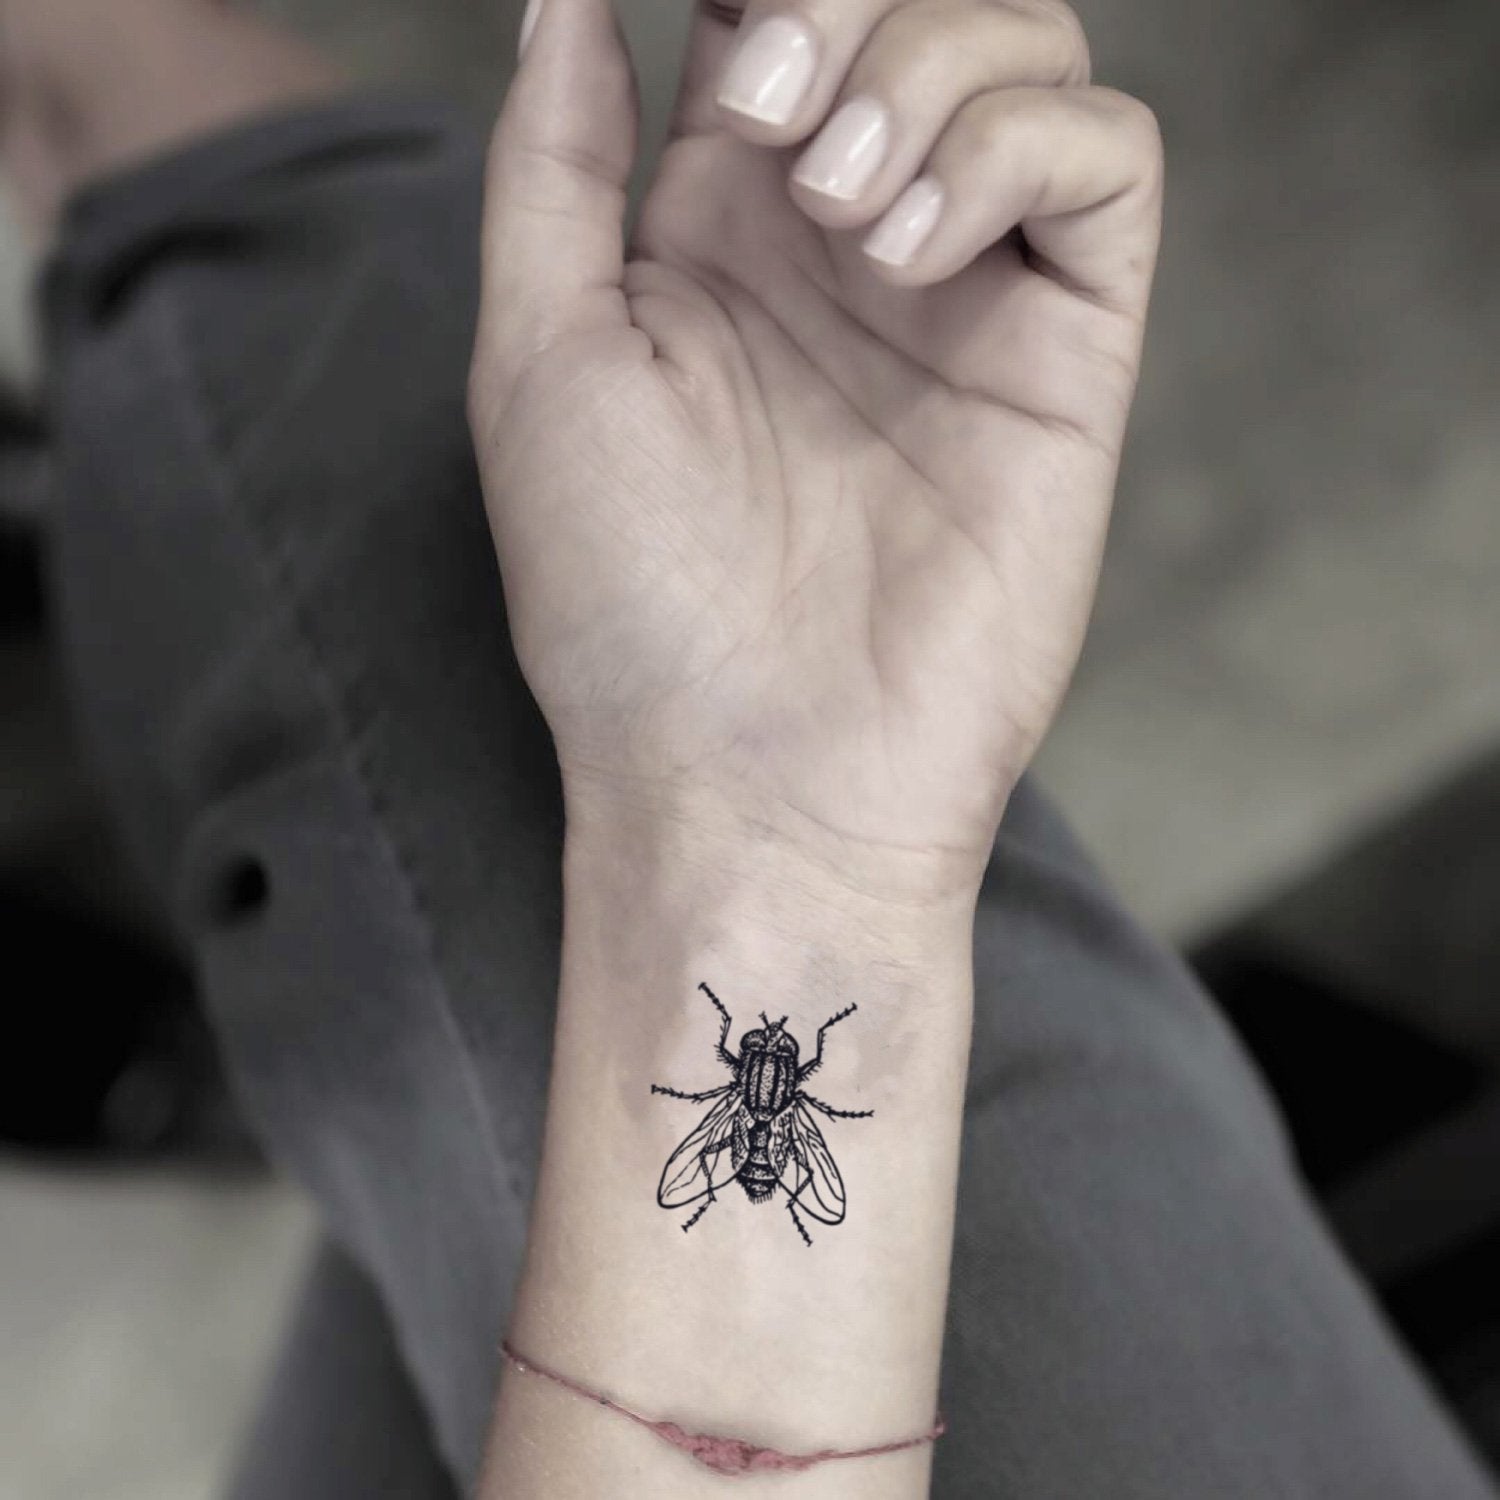 fake small fly animal temporary tattoo sticker design idea on wrist